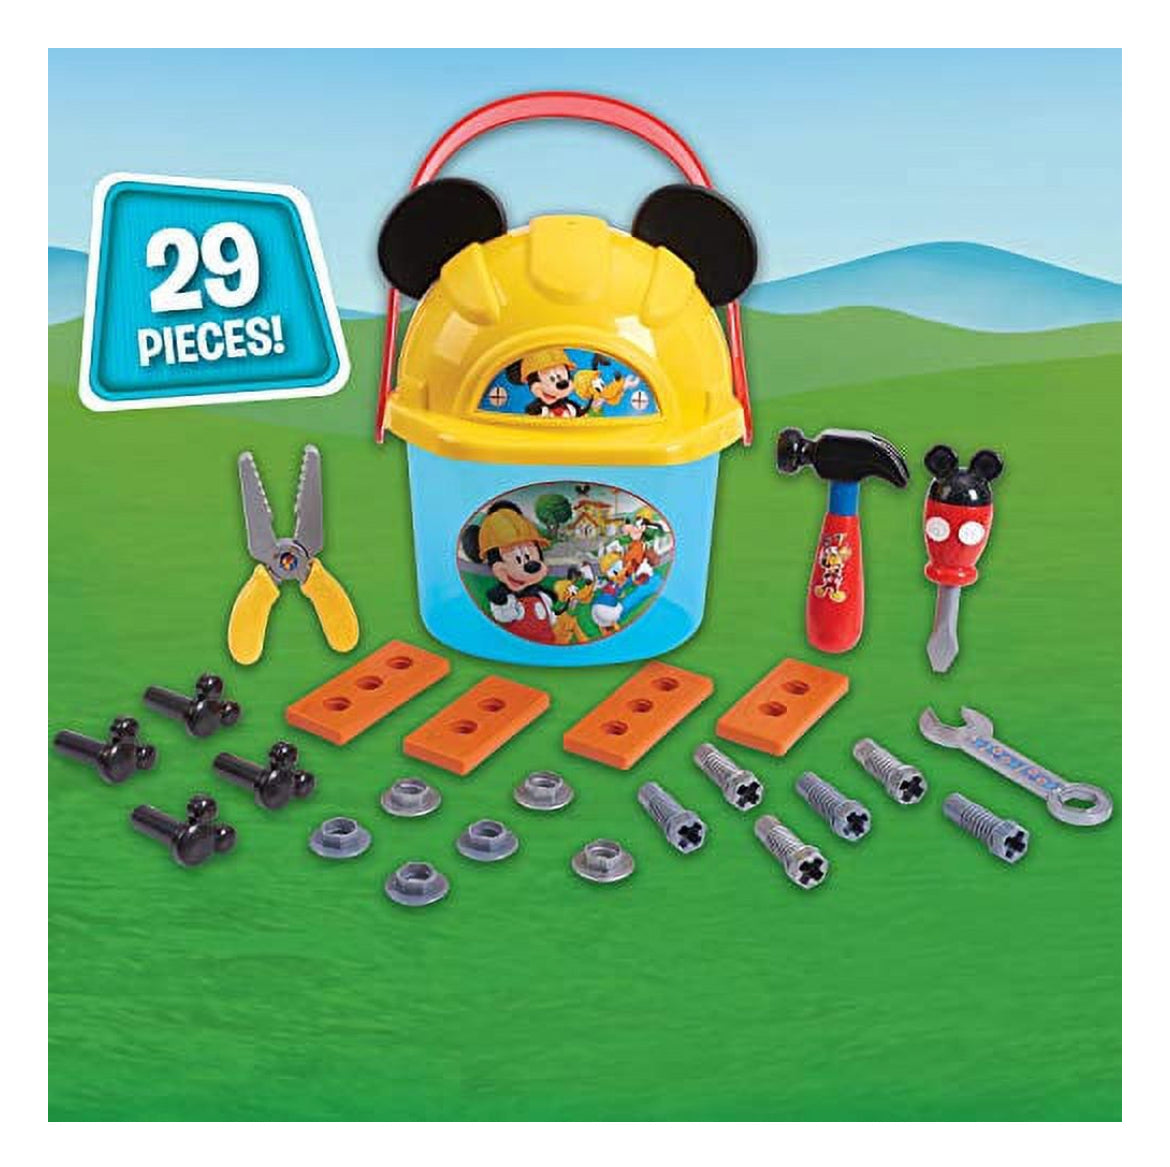 Disney Junior Mickey Mouse Handy Helper Tool Bucket Construction Role Play Set, 25-pieces